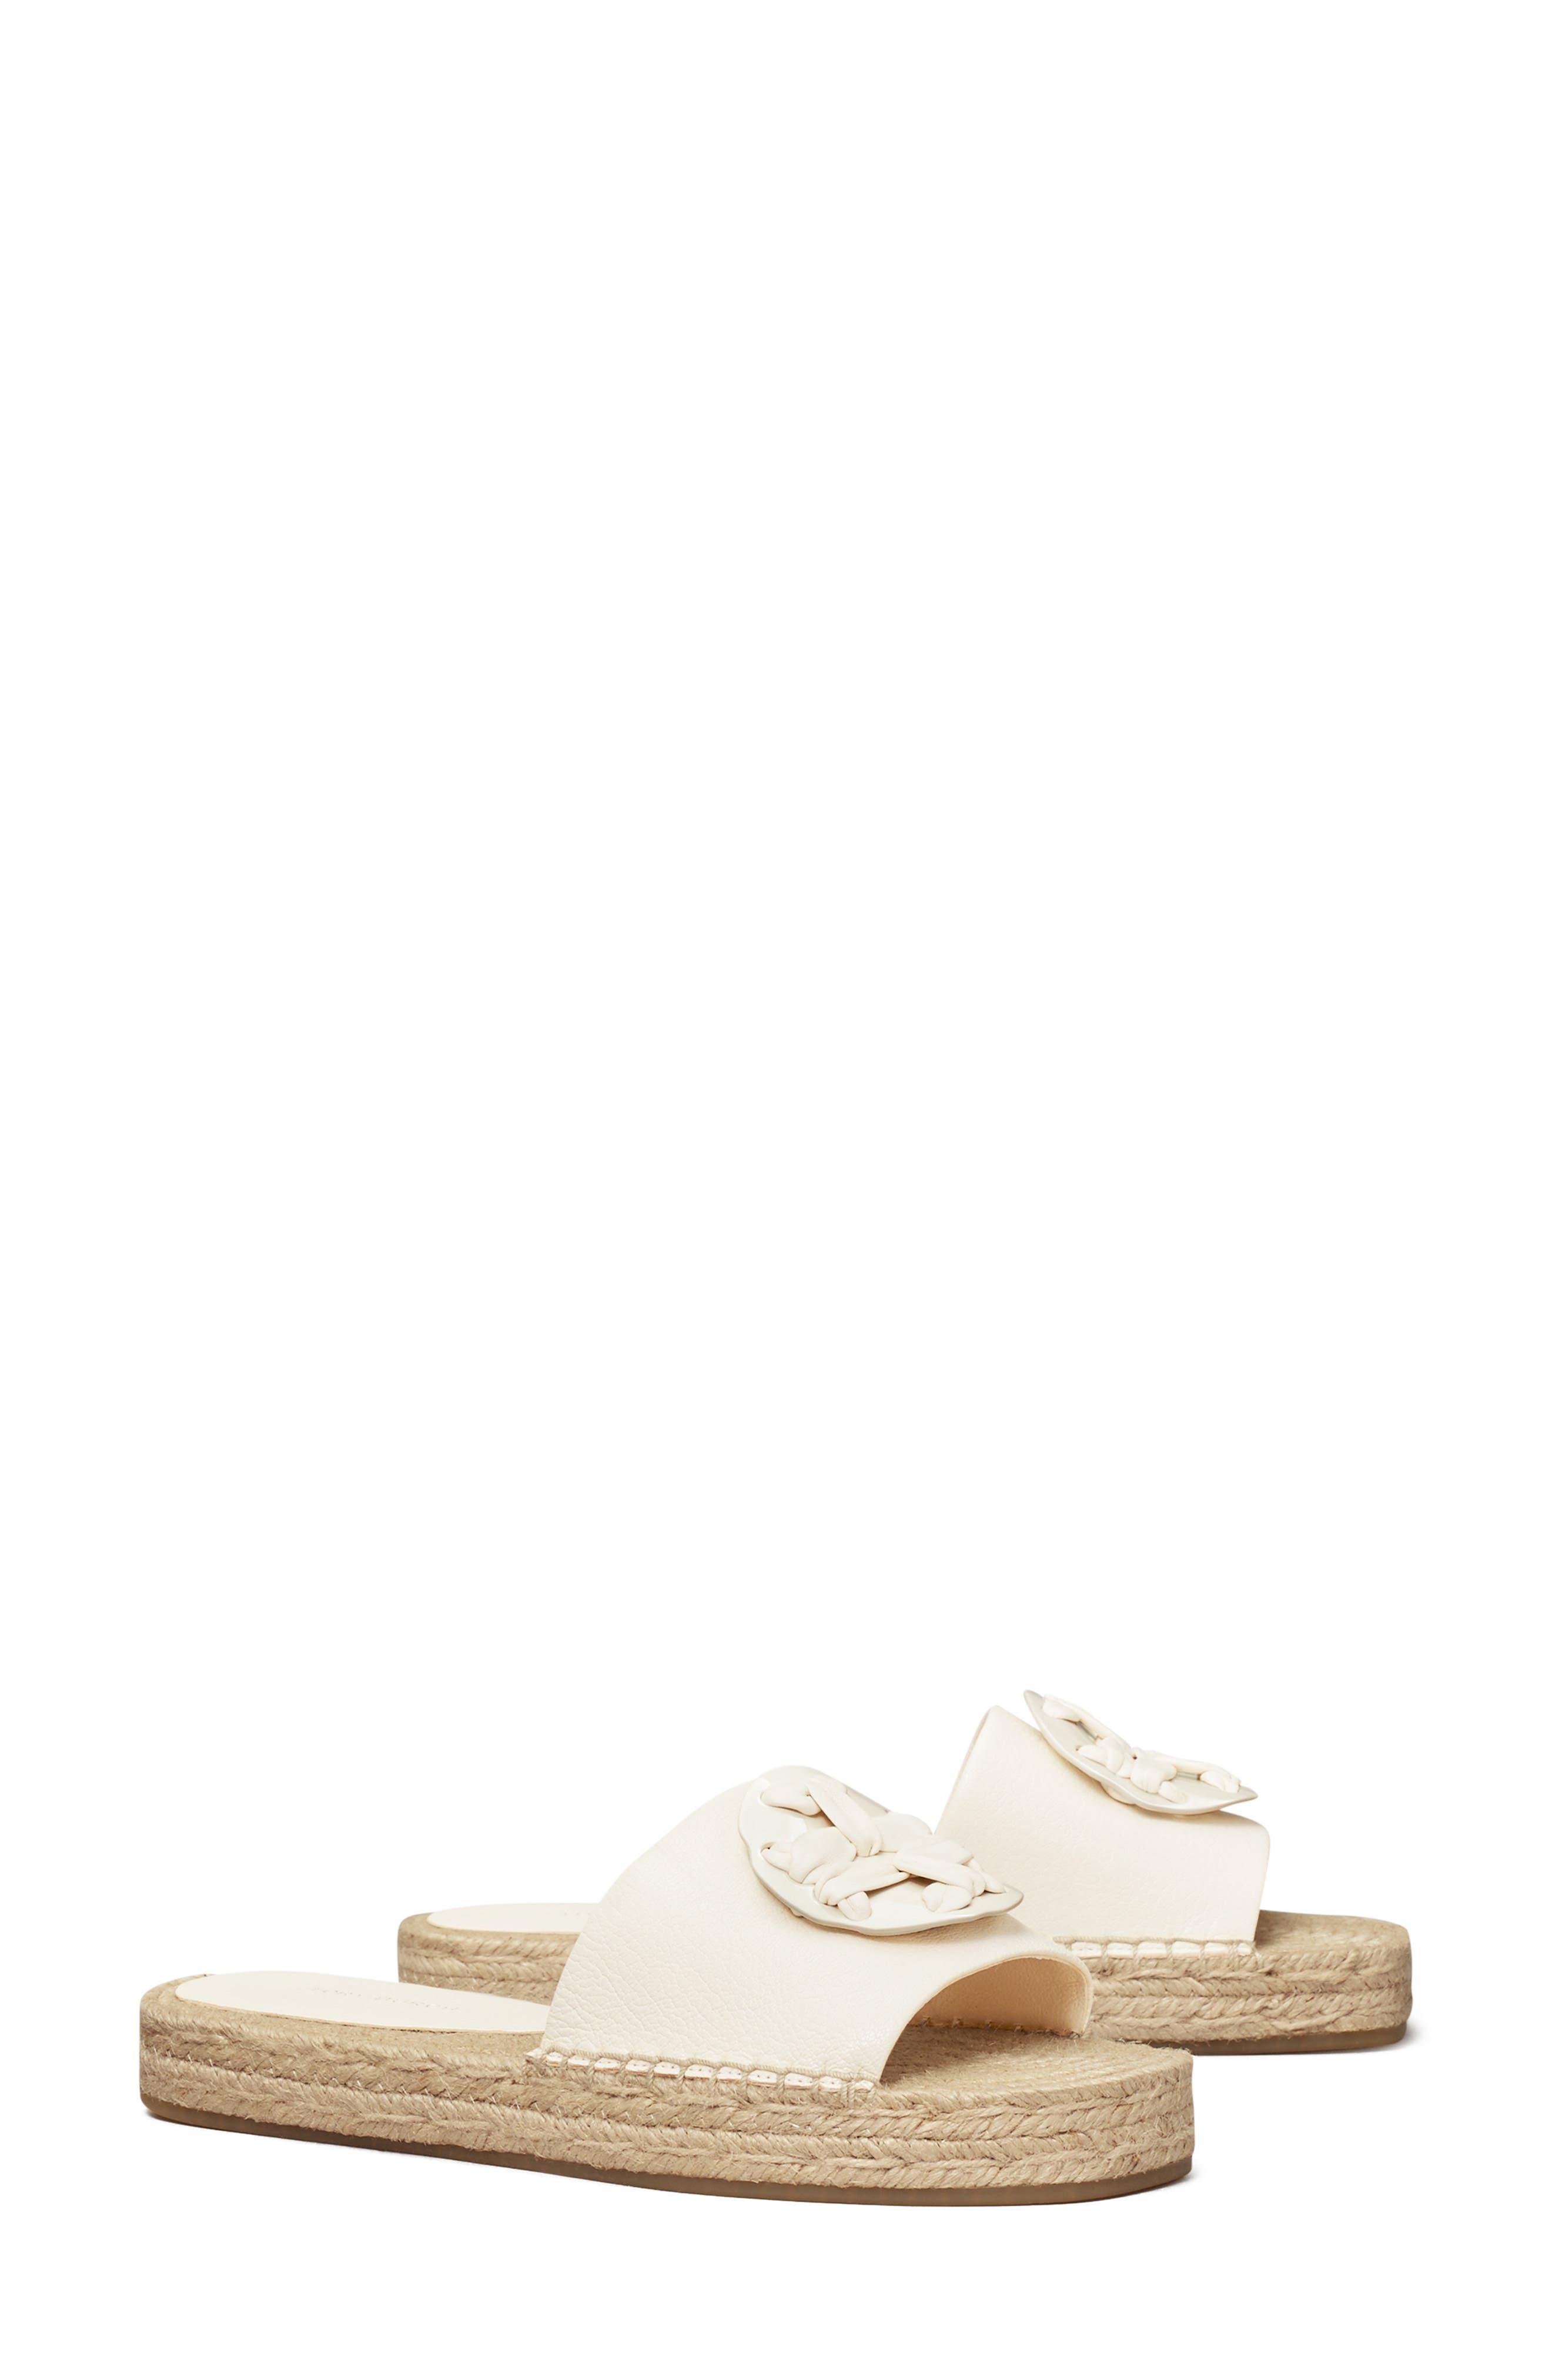 Tory Burch Woven Double T Espadrille Slide Sandal in White | Lyst